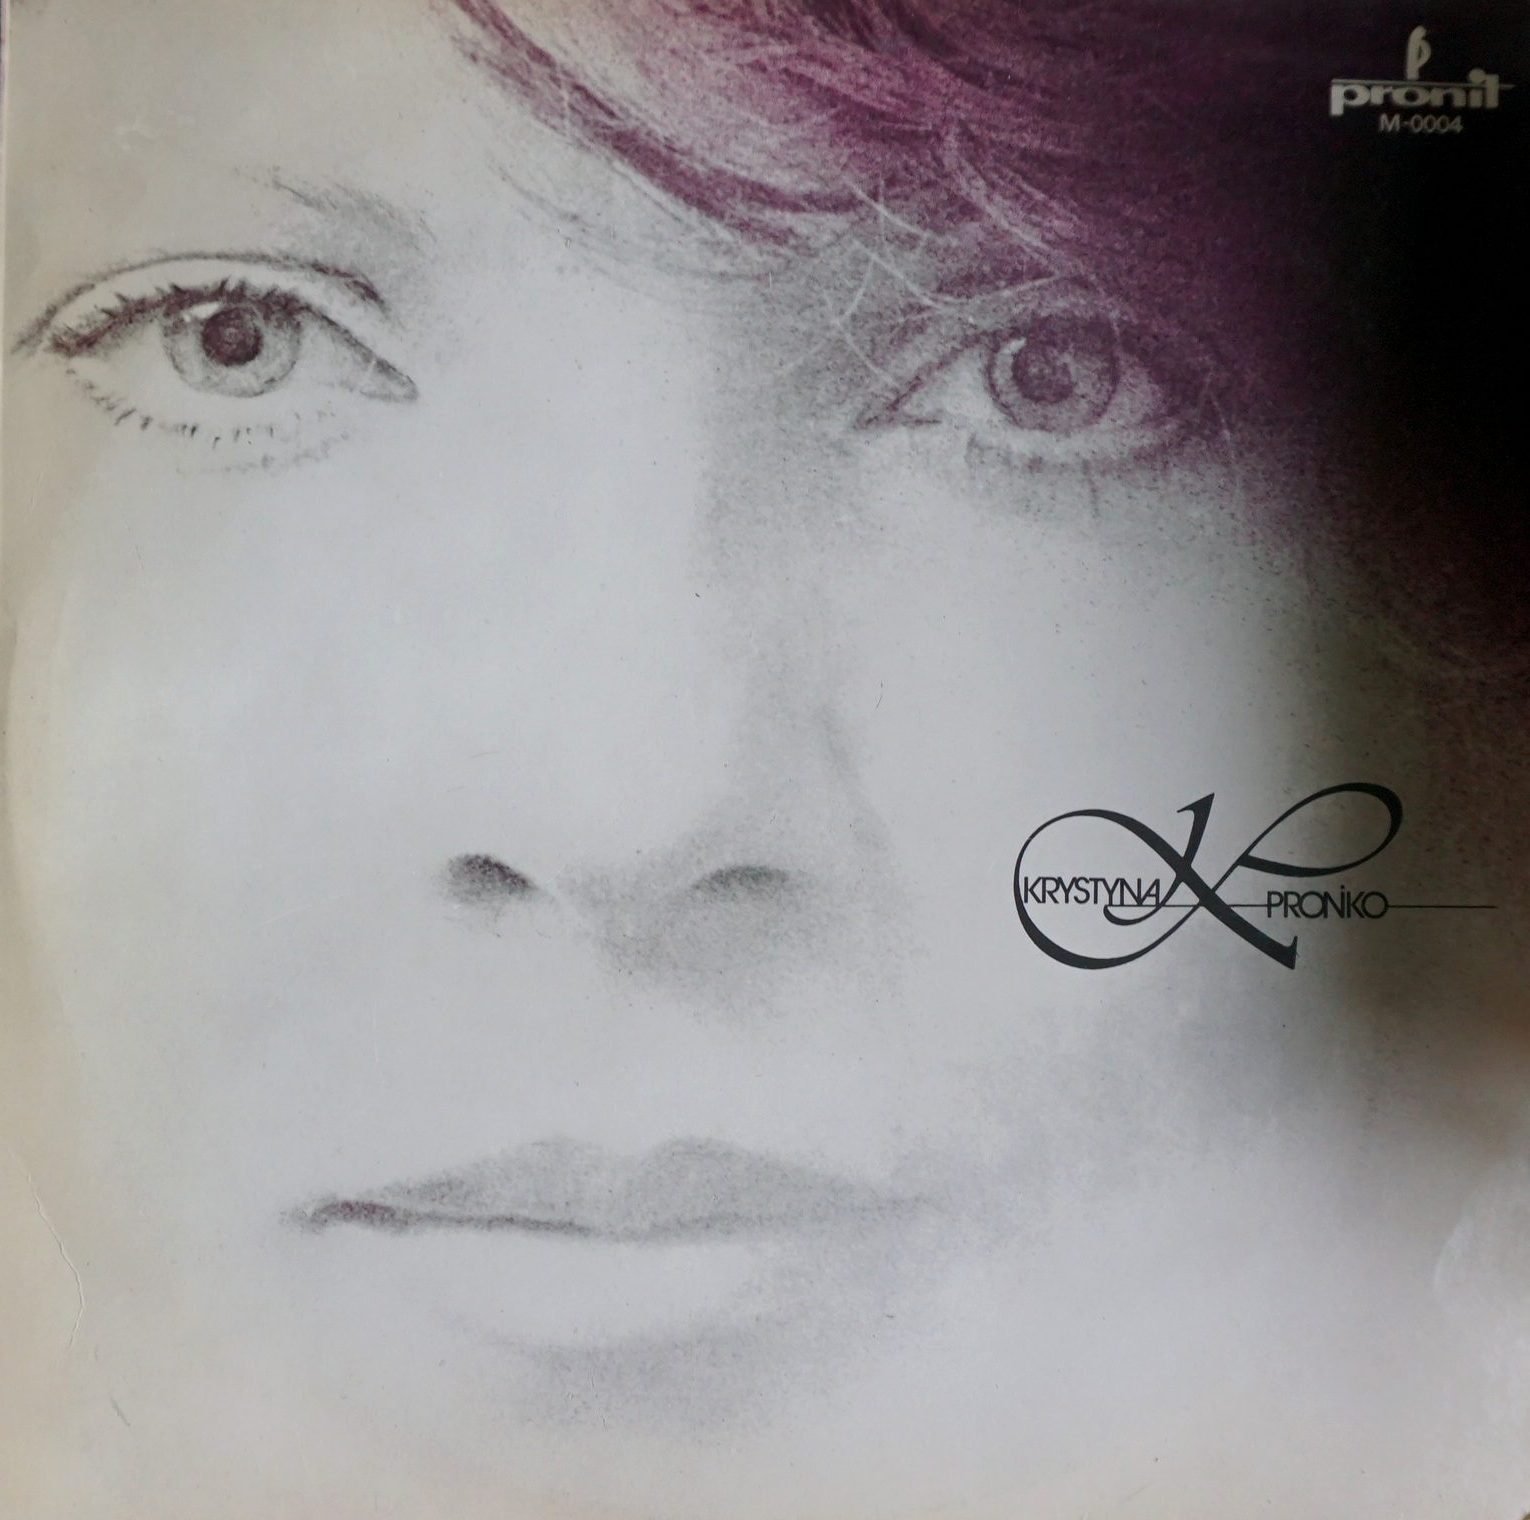 Krystyna Prońko – Krystyna Prońko [Vinyl LP] (VG/VG)